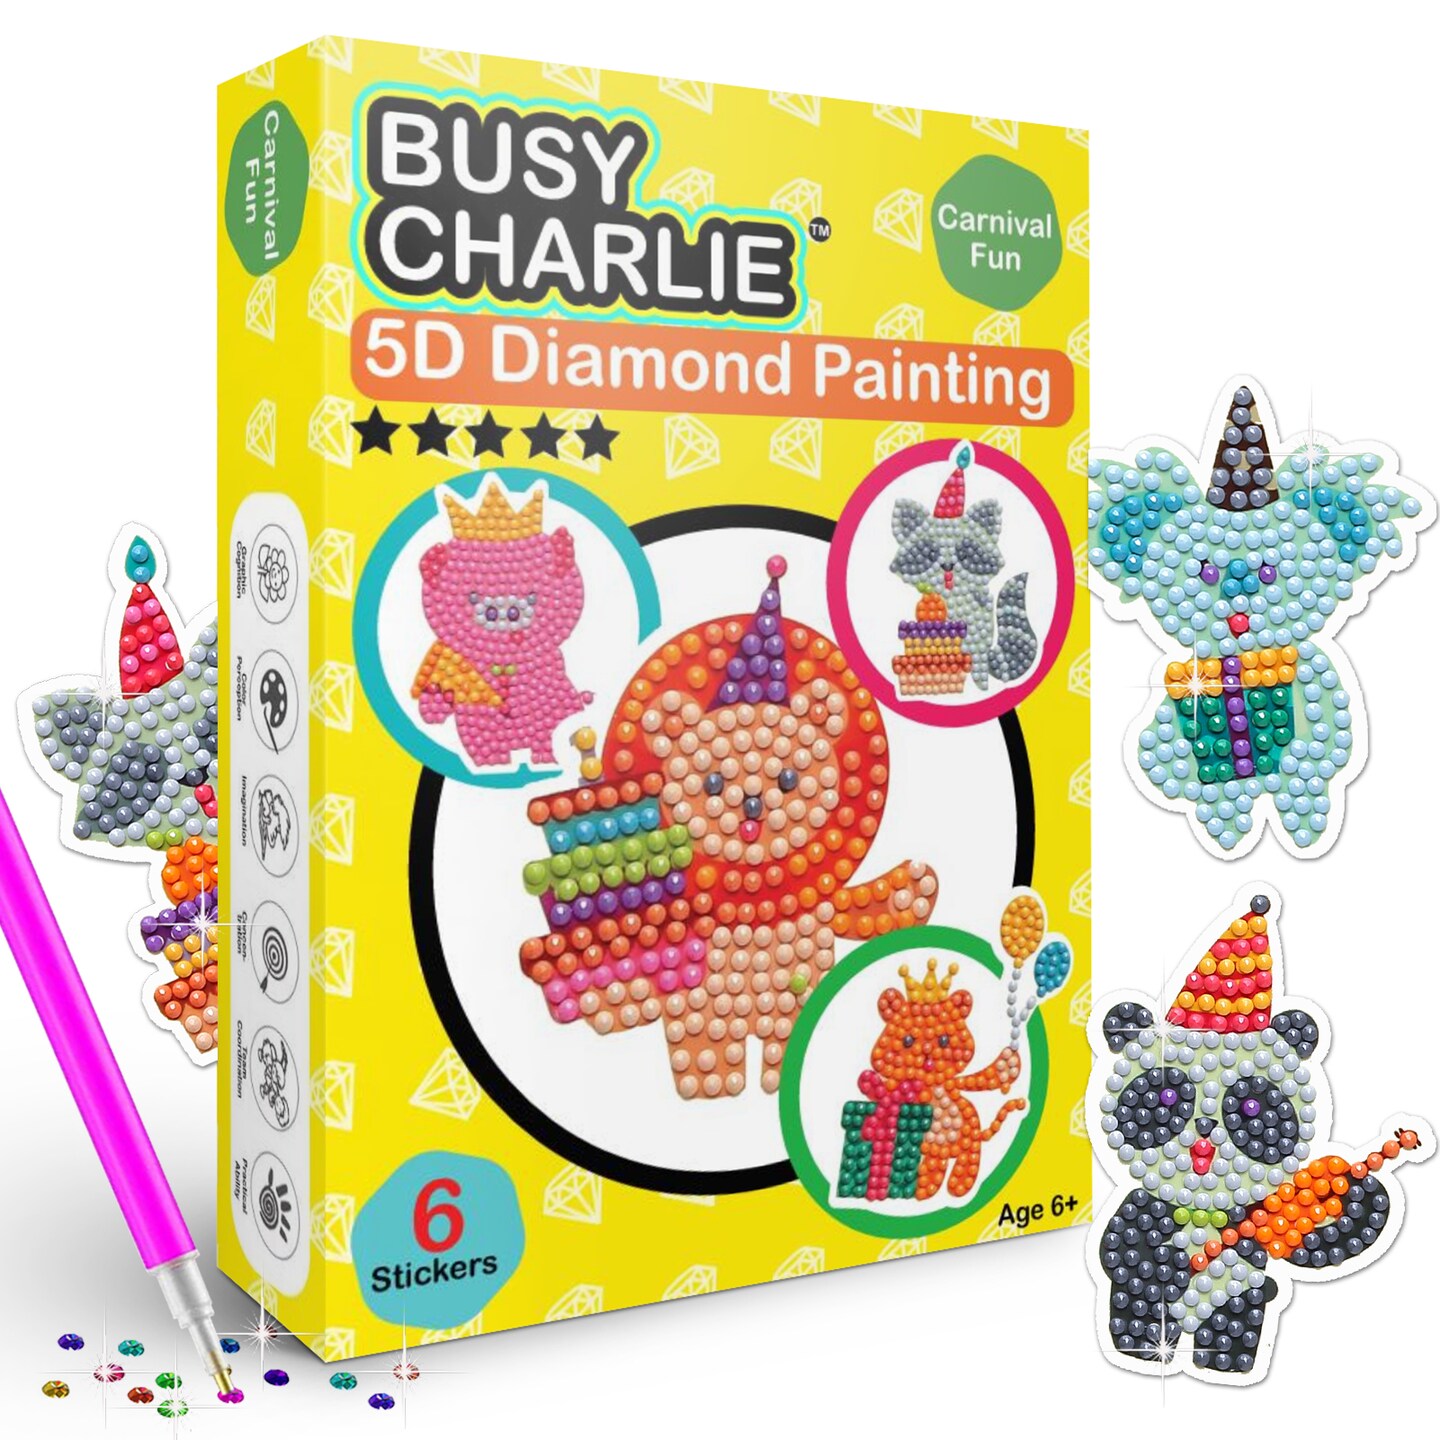 5D Diamond Painting Kit for Kids - Carnival Fun